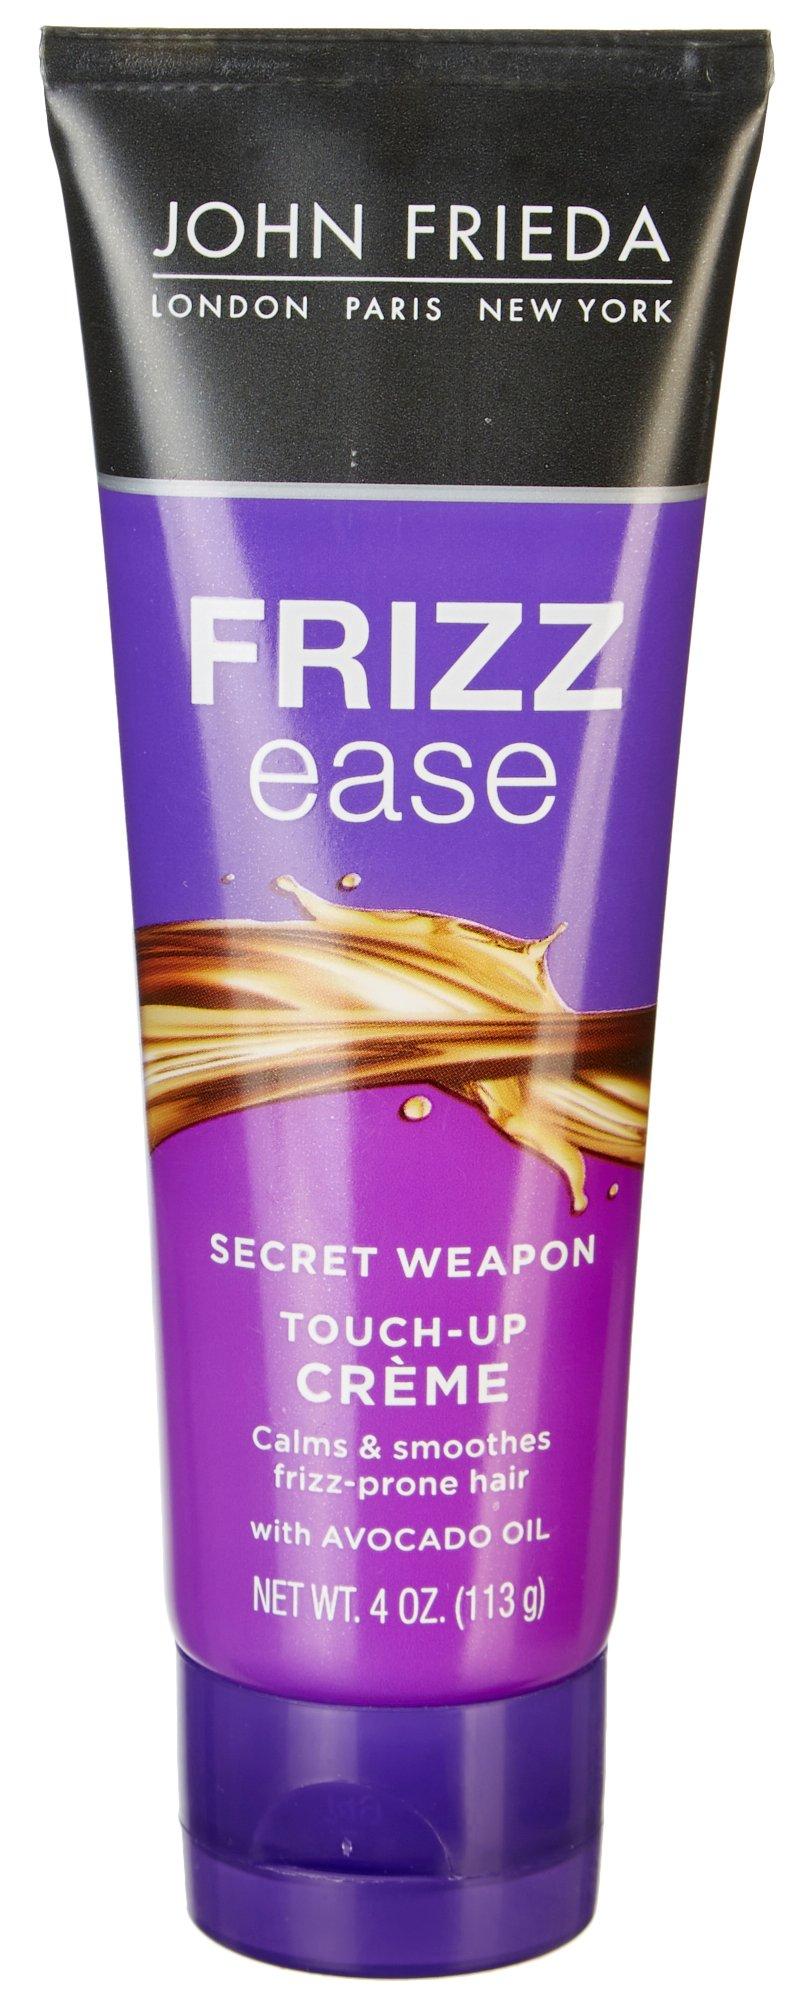 Frizz Ease Secret Weapon Touch-Up Creme 4 oz.